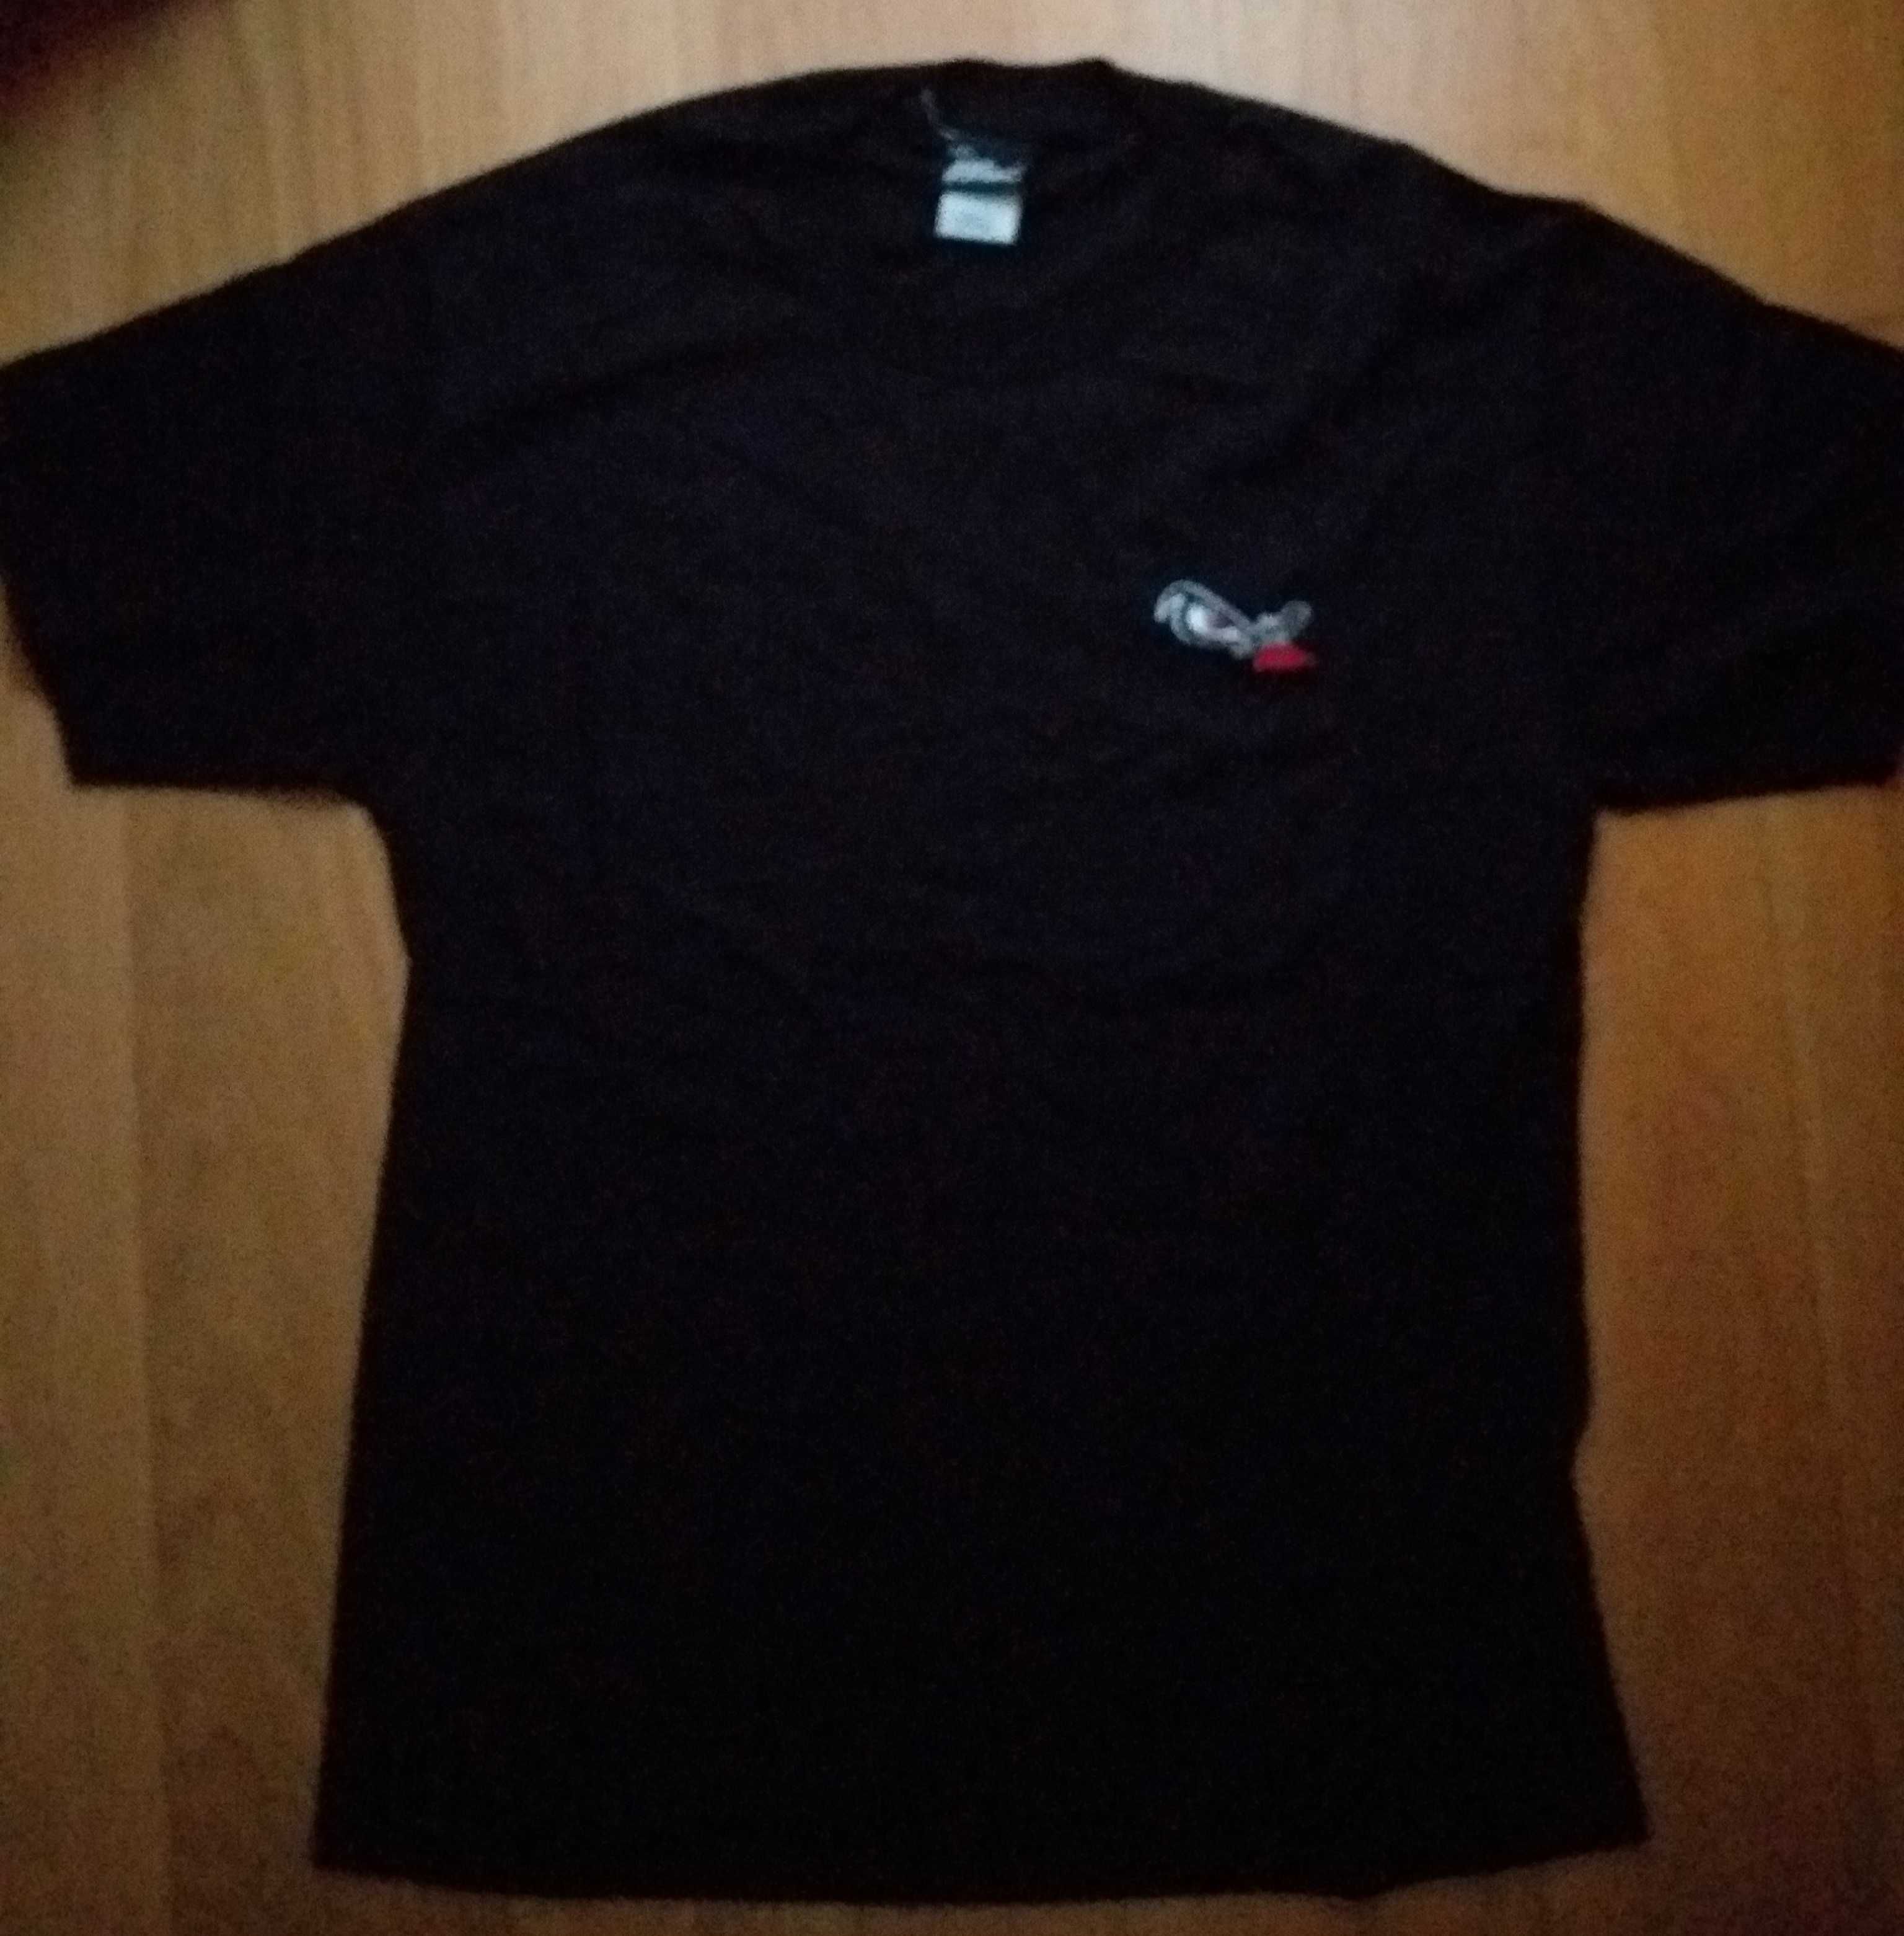 T-shirt No Fear preta, original, nova, tamanho L